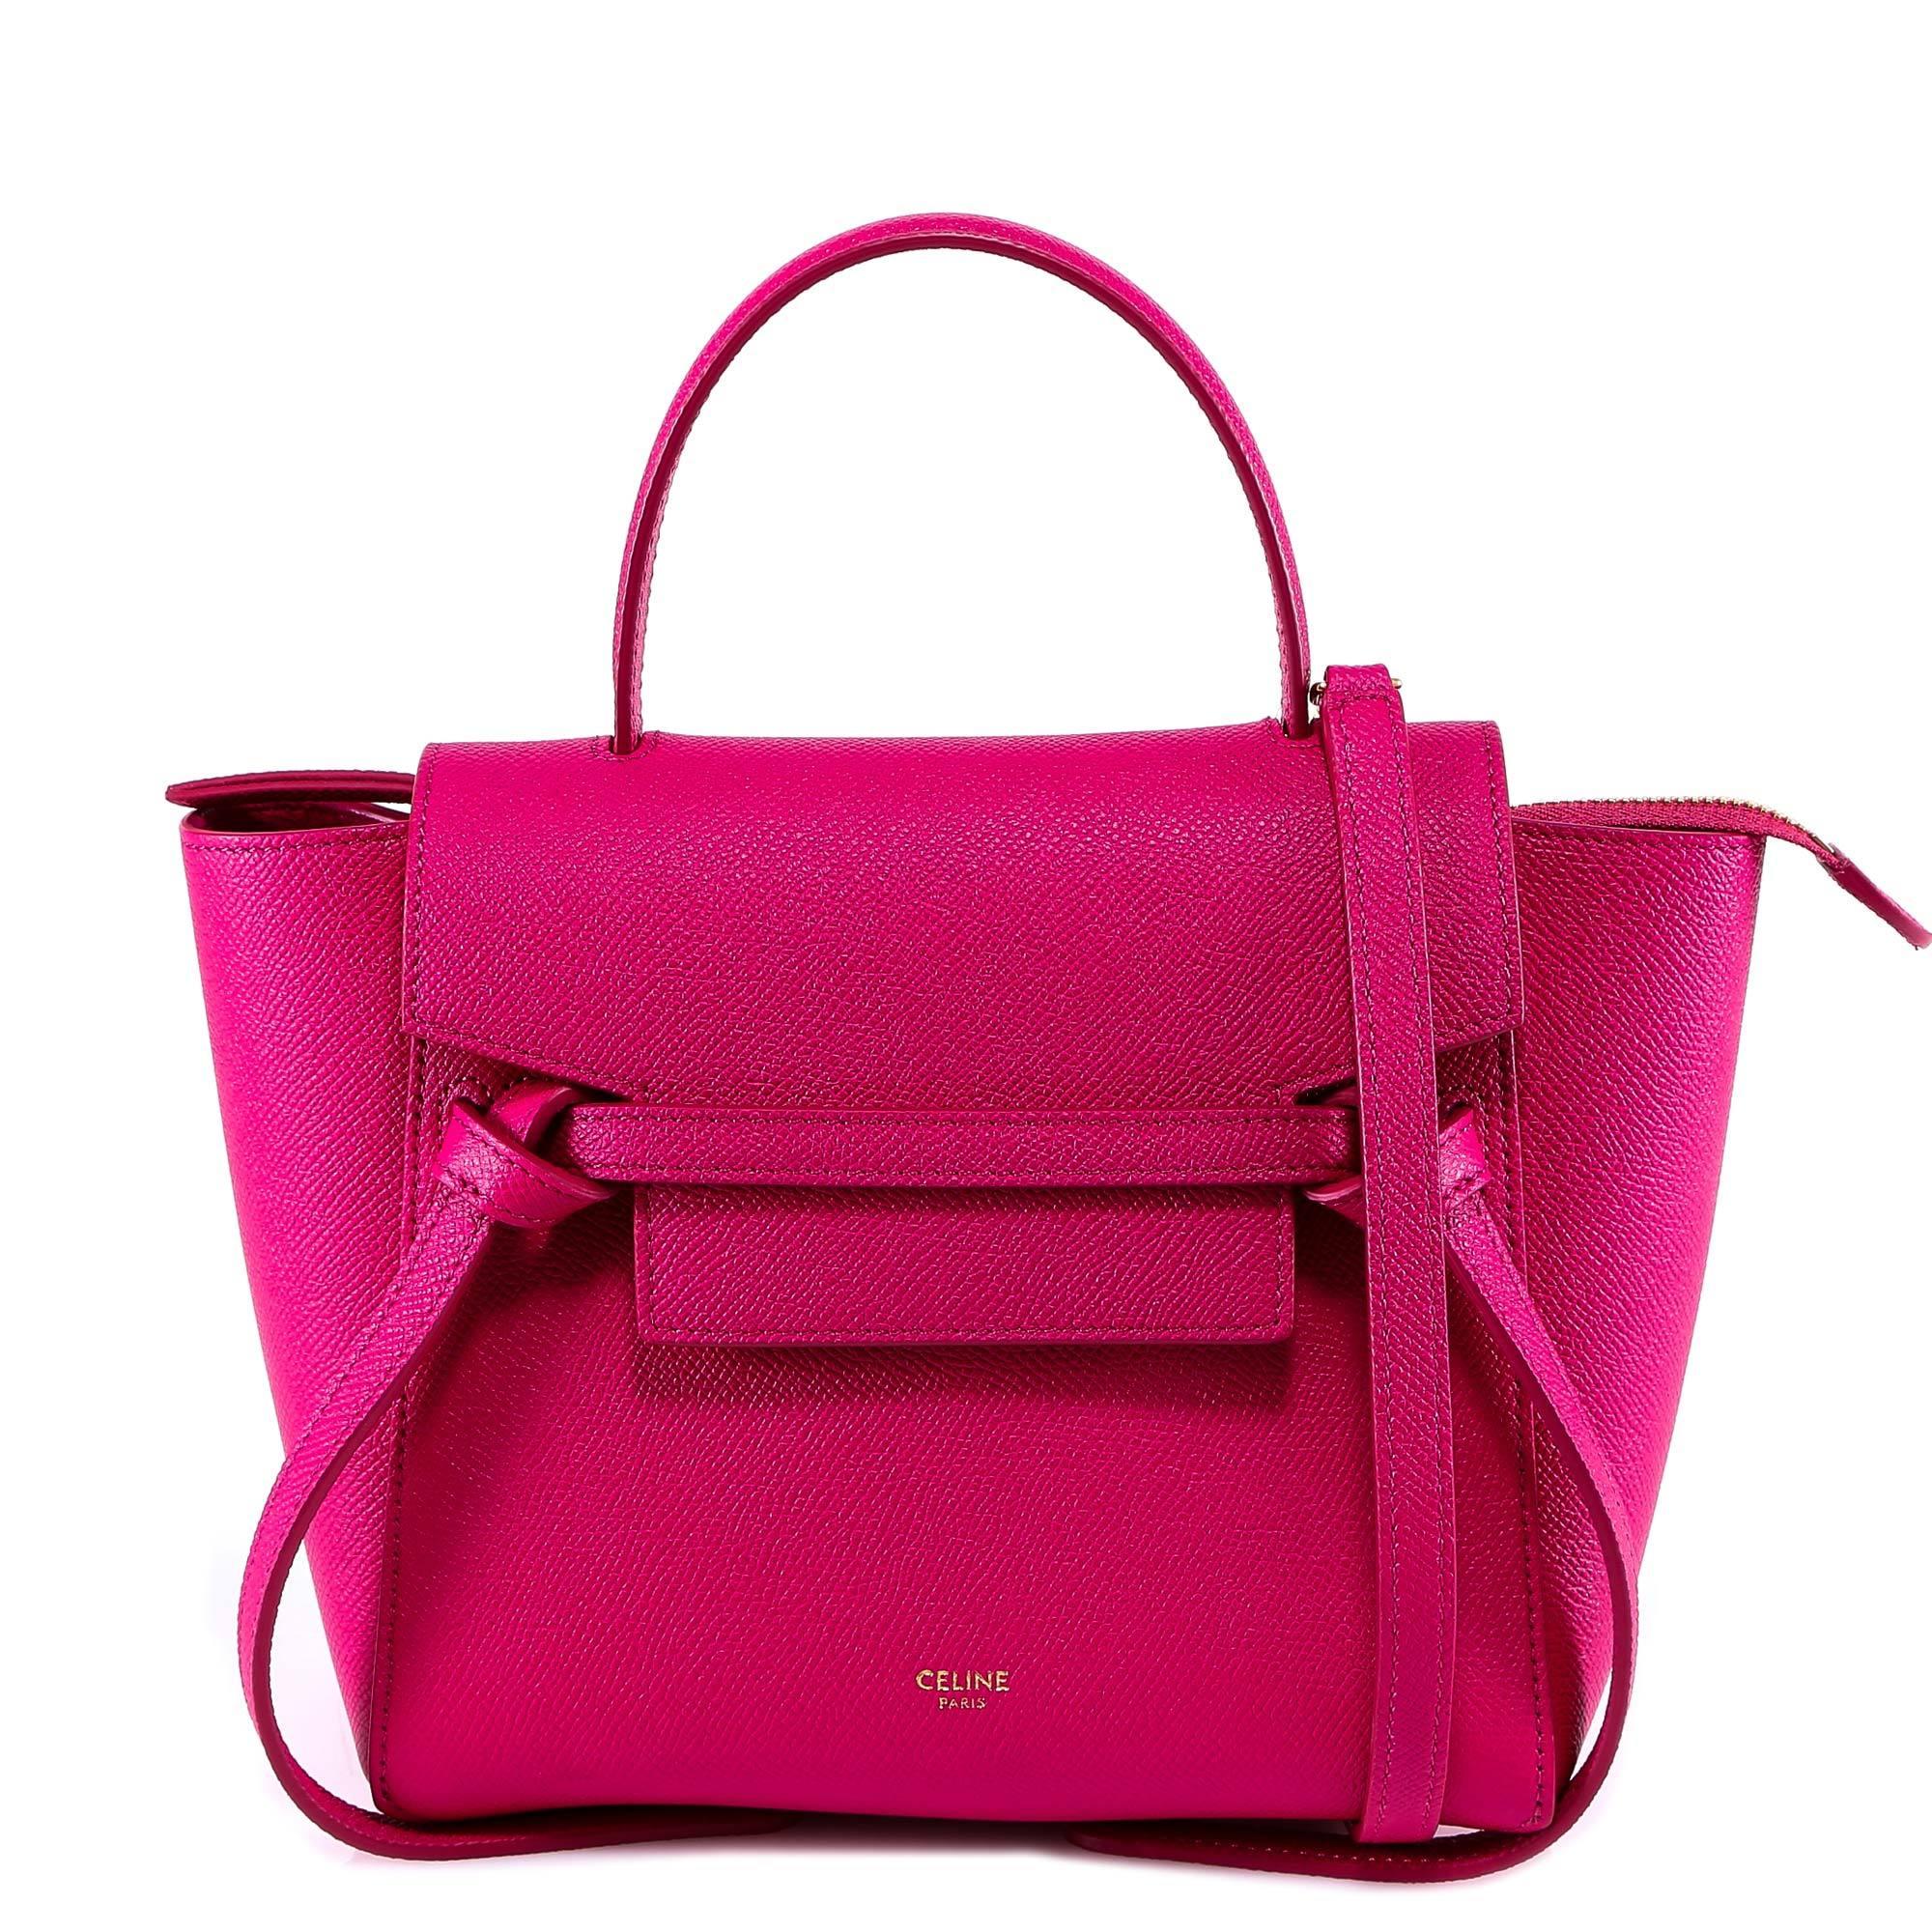 Céline Nano Belt Bag in Pink - Lyst